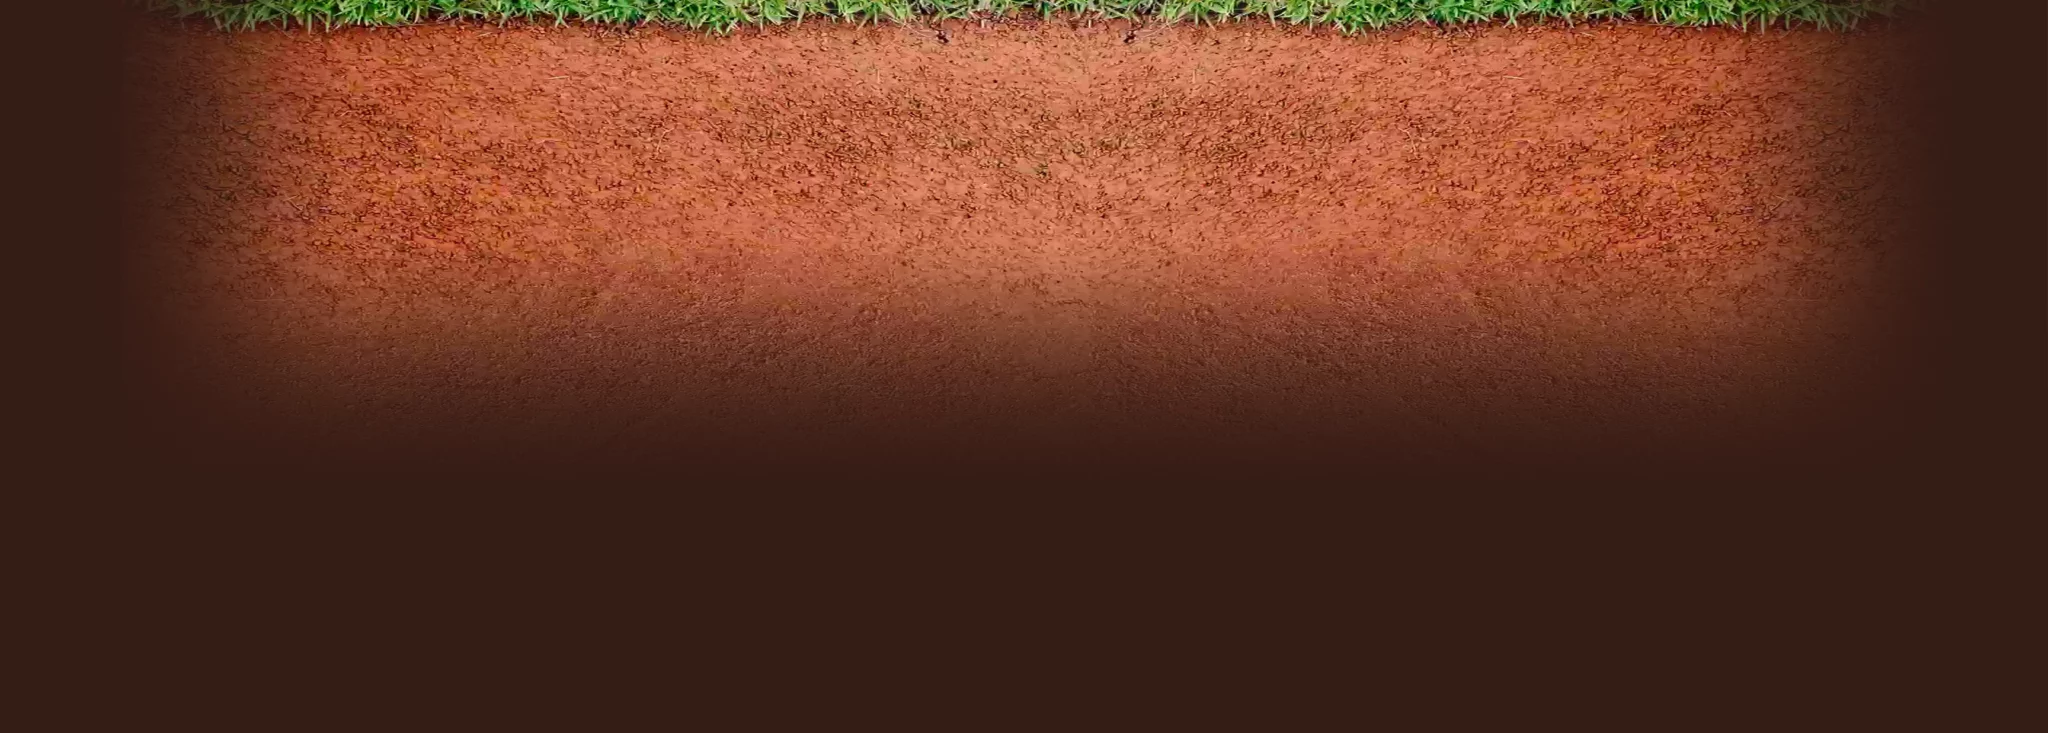 Baseball field background